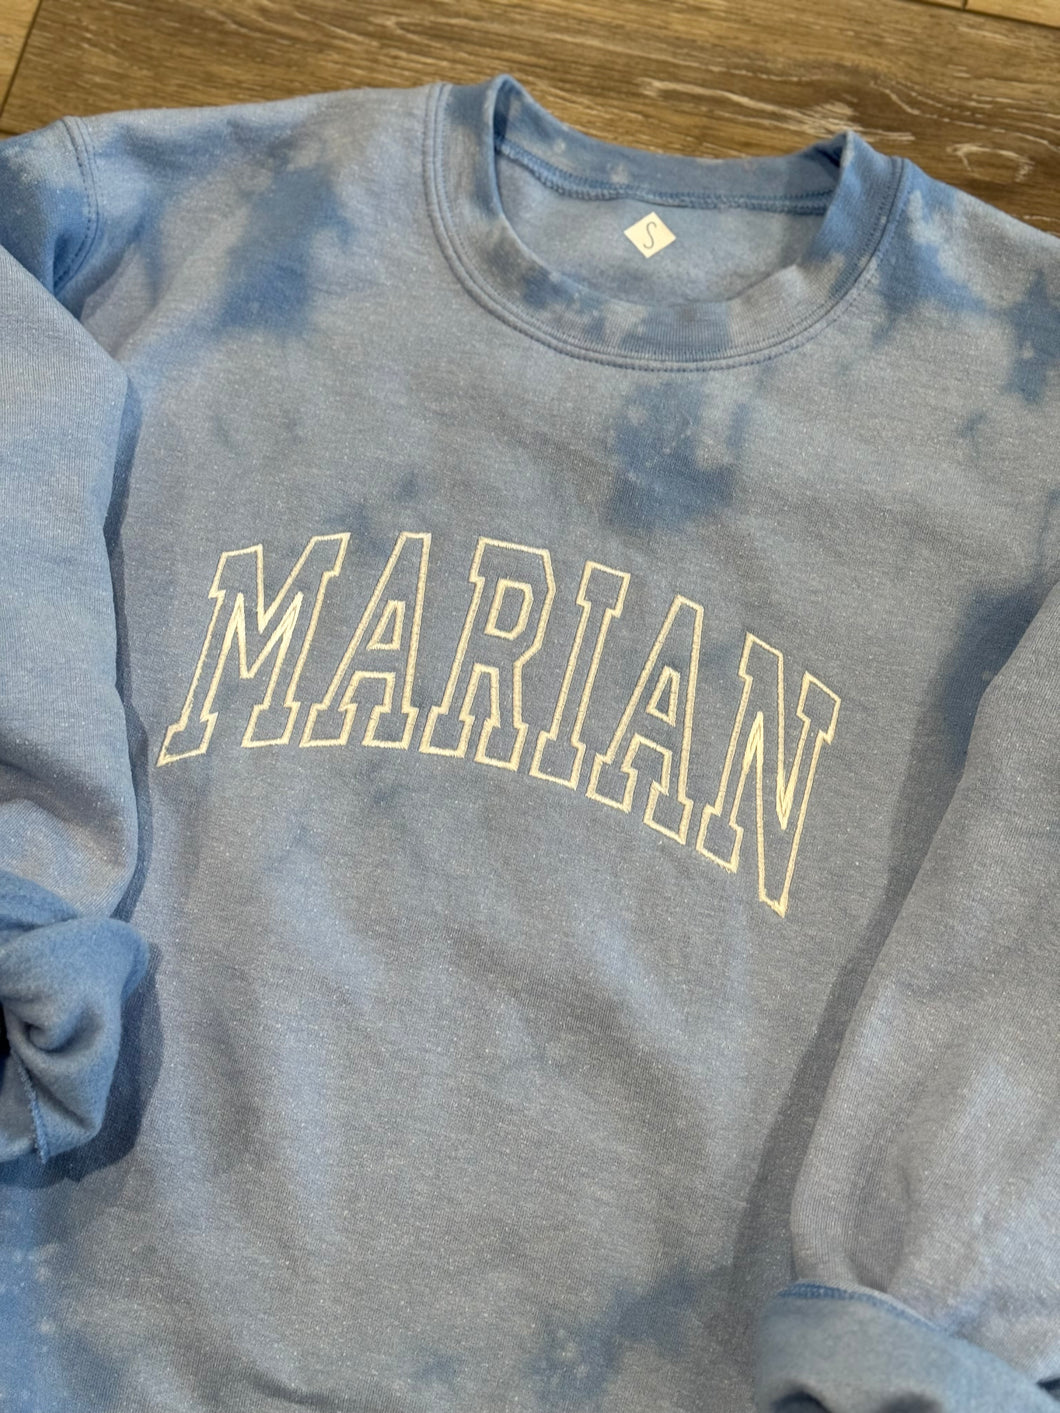 Bleach Burst Dusty Blue Embroidered Marian Mustangs Sweatshirt